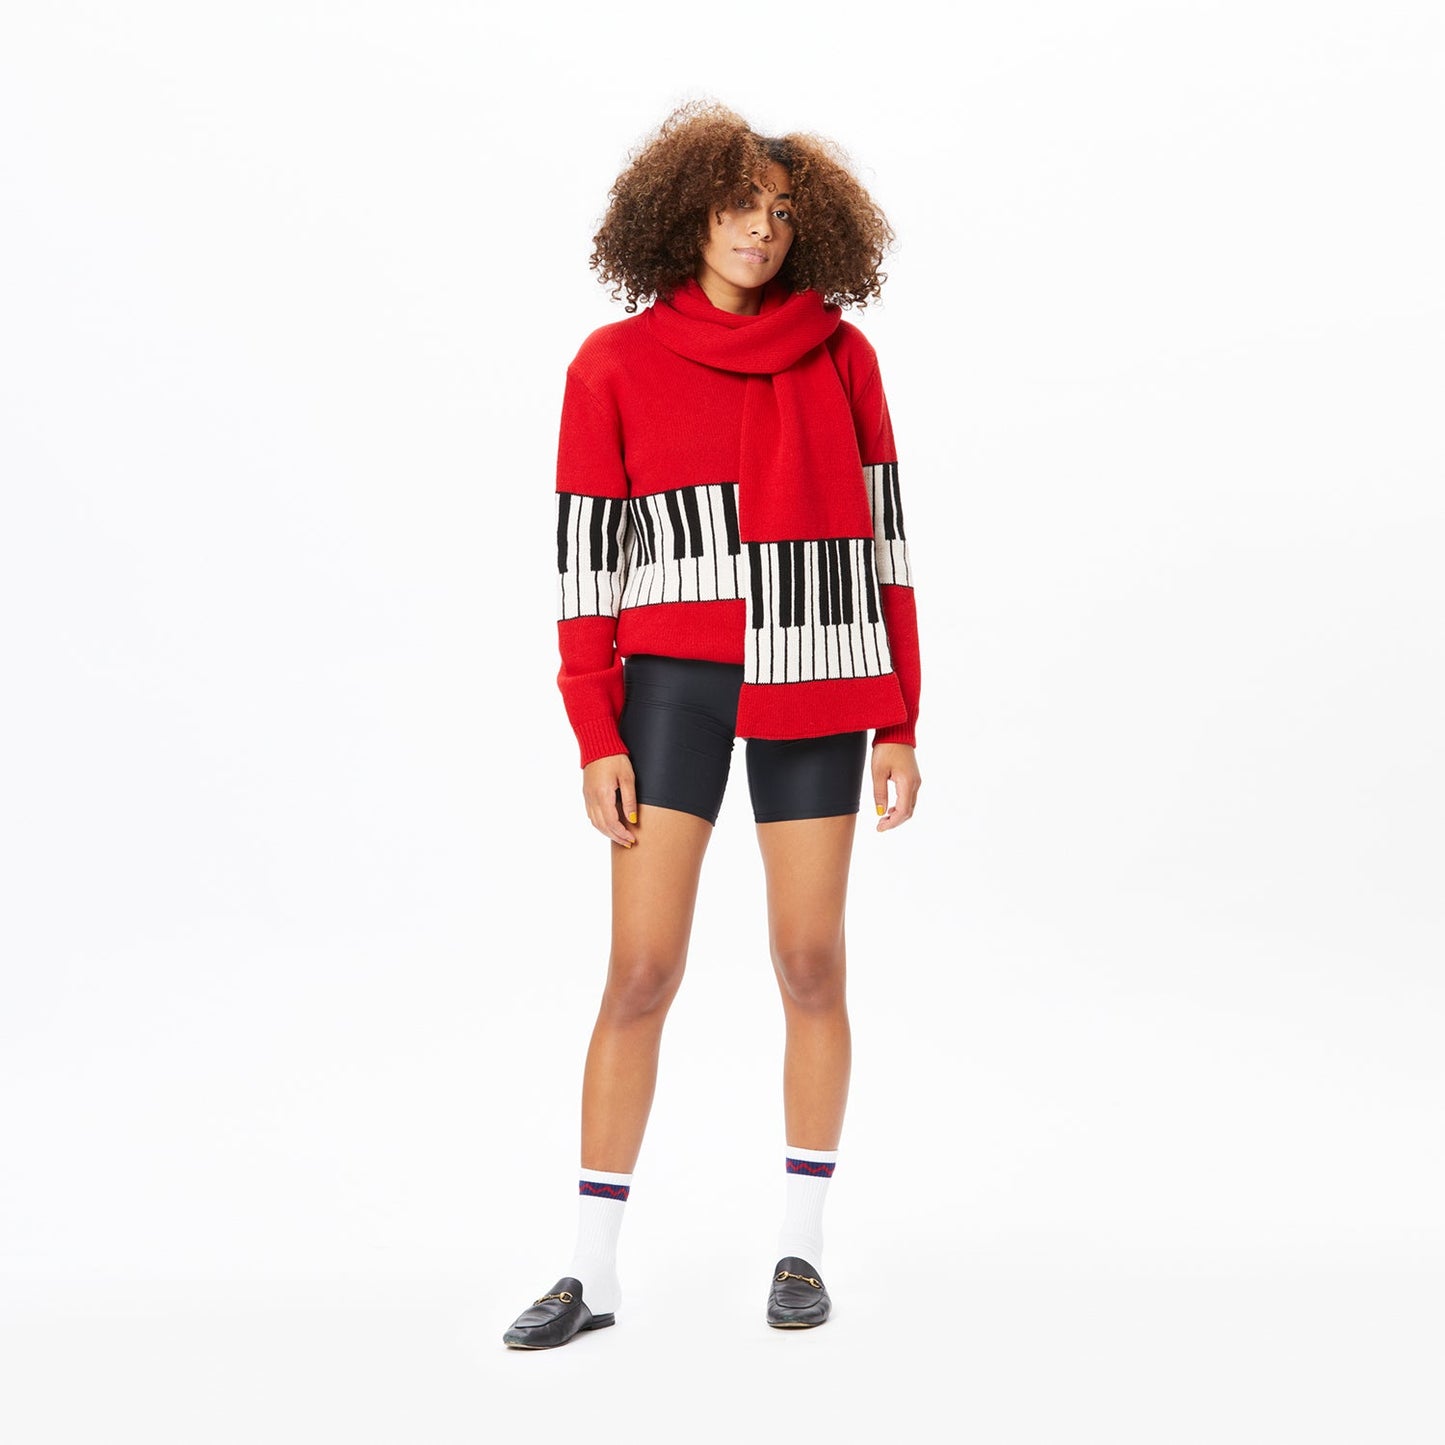 Gyles & George Women's Piano Sweater